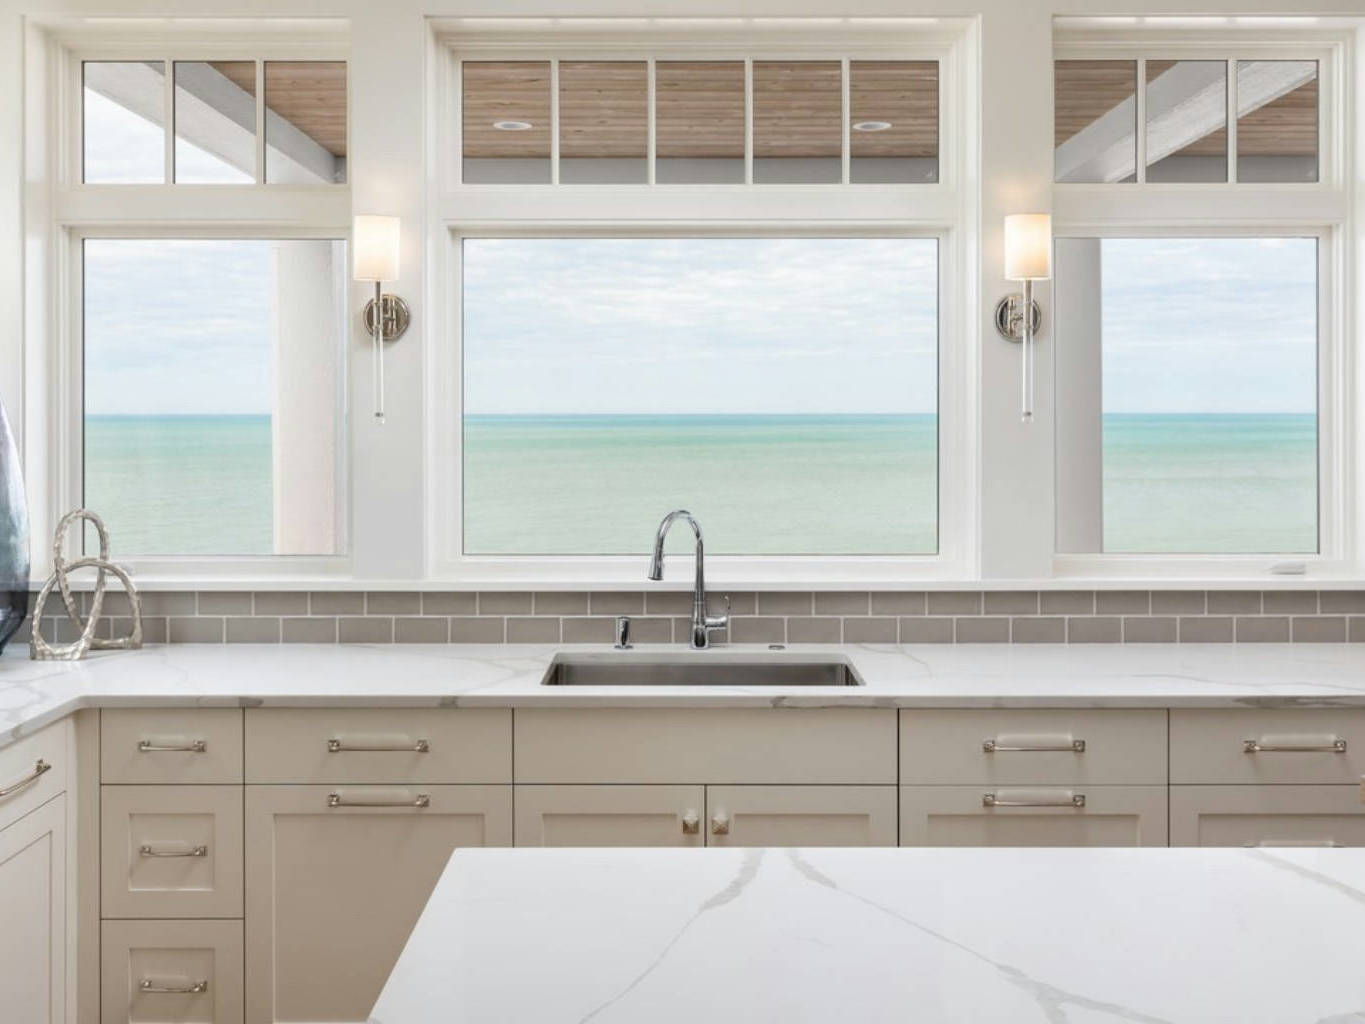 Kitchen with stunning views | Adex USA